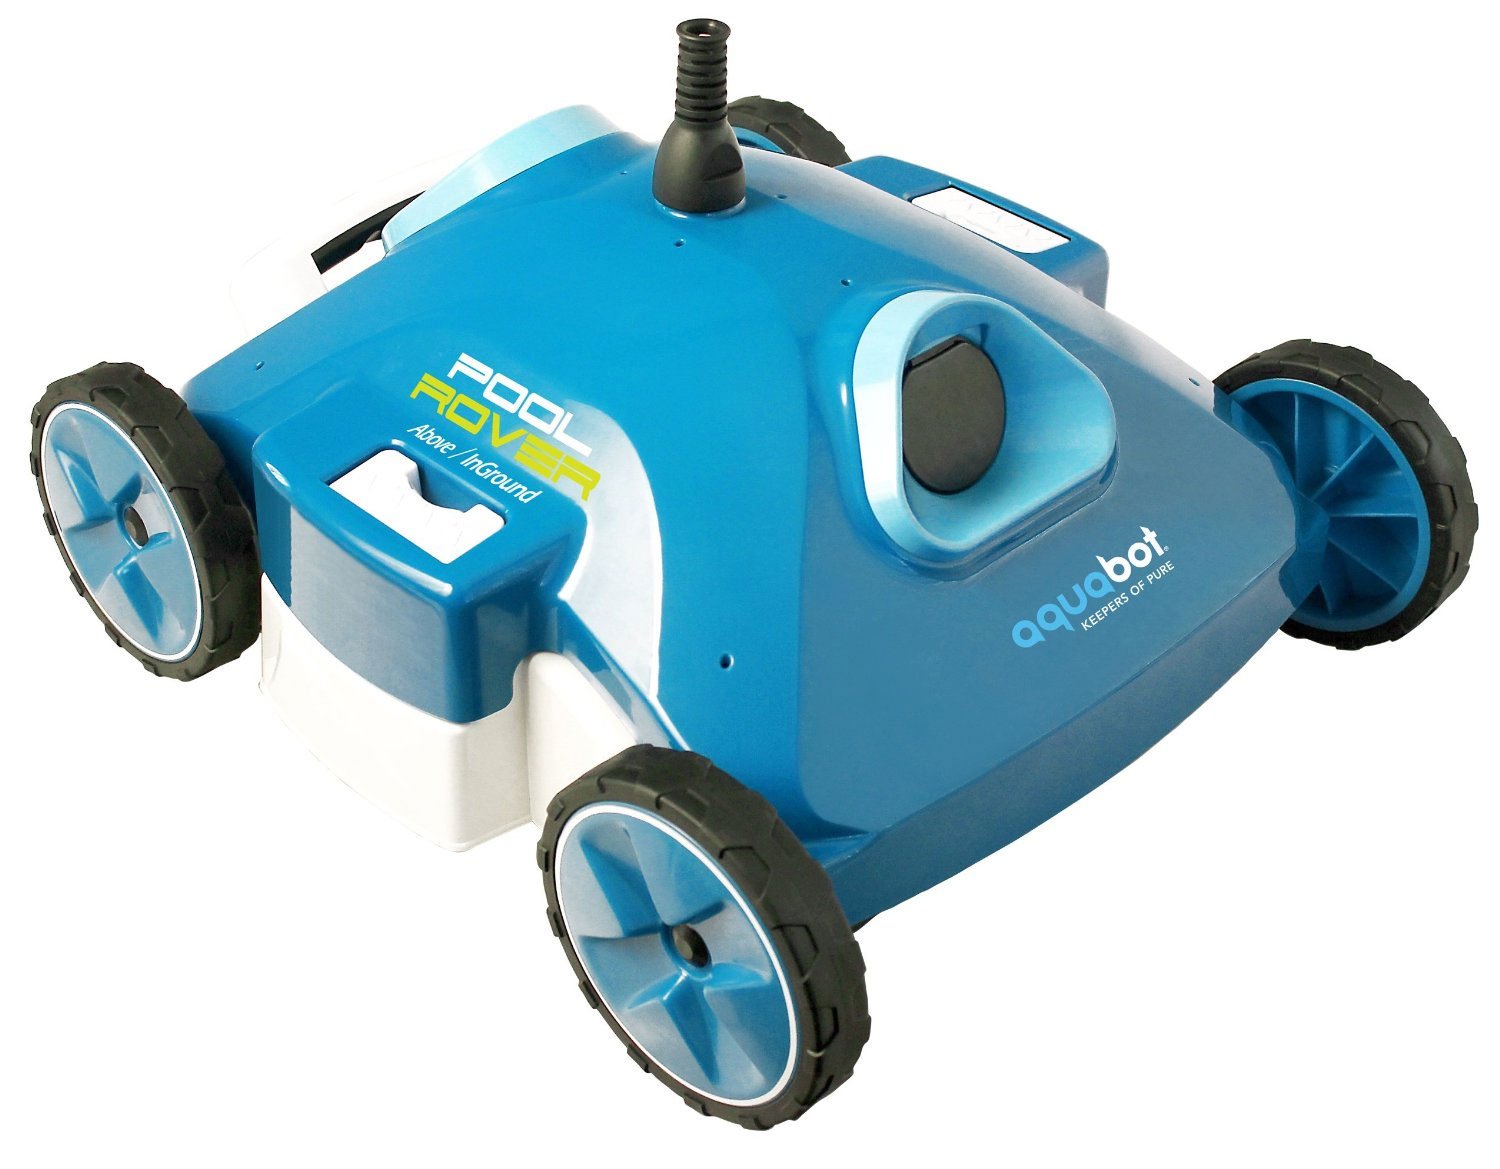 Aquabot Rover S2 40 Best Robotic Pool Cleaner